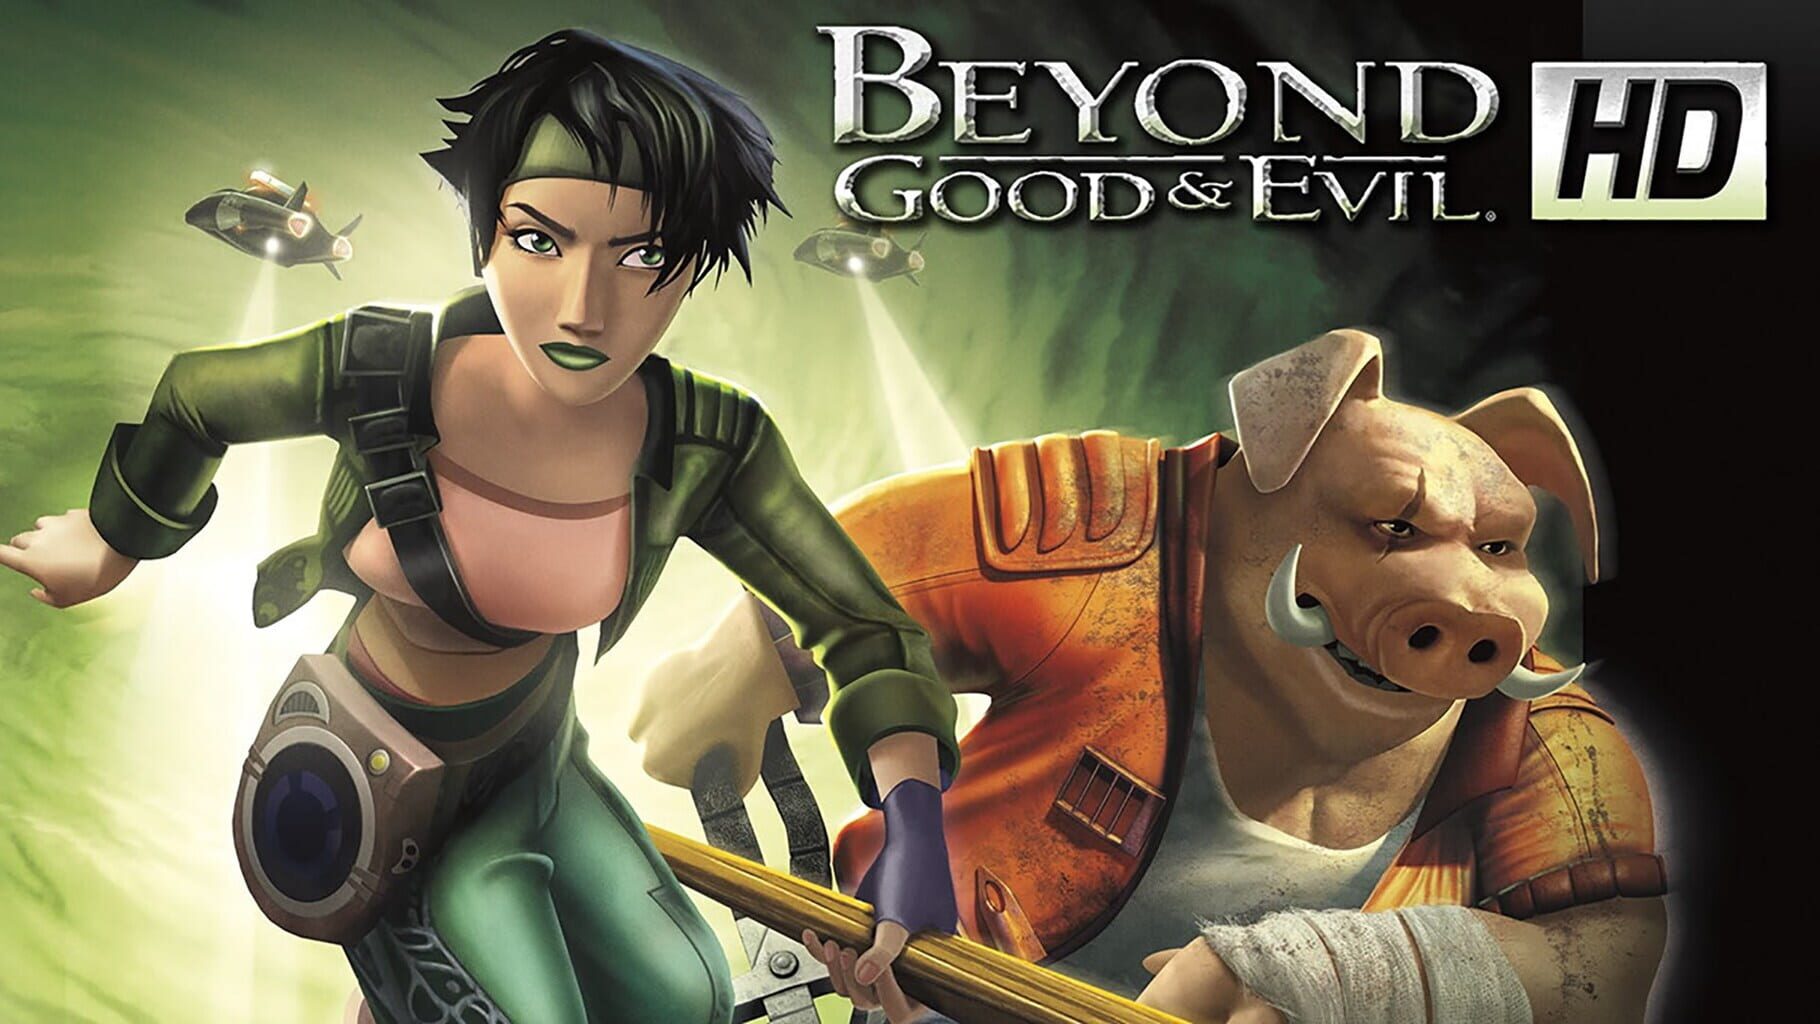 Beyond Good & Evil HD Image